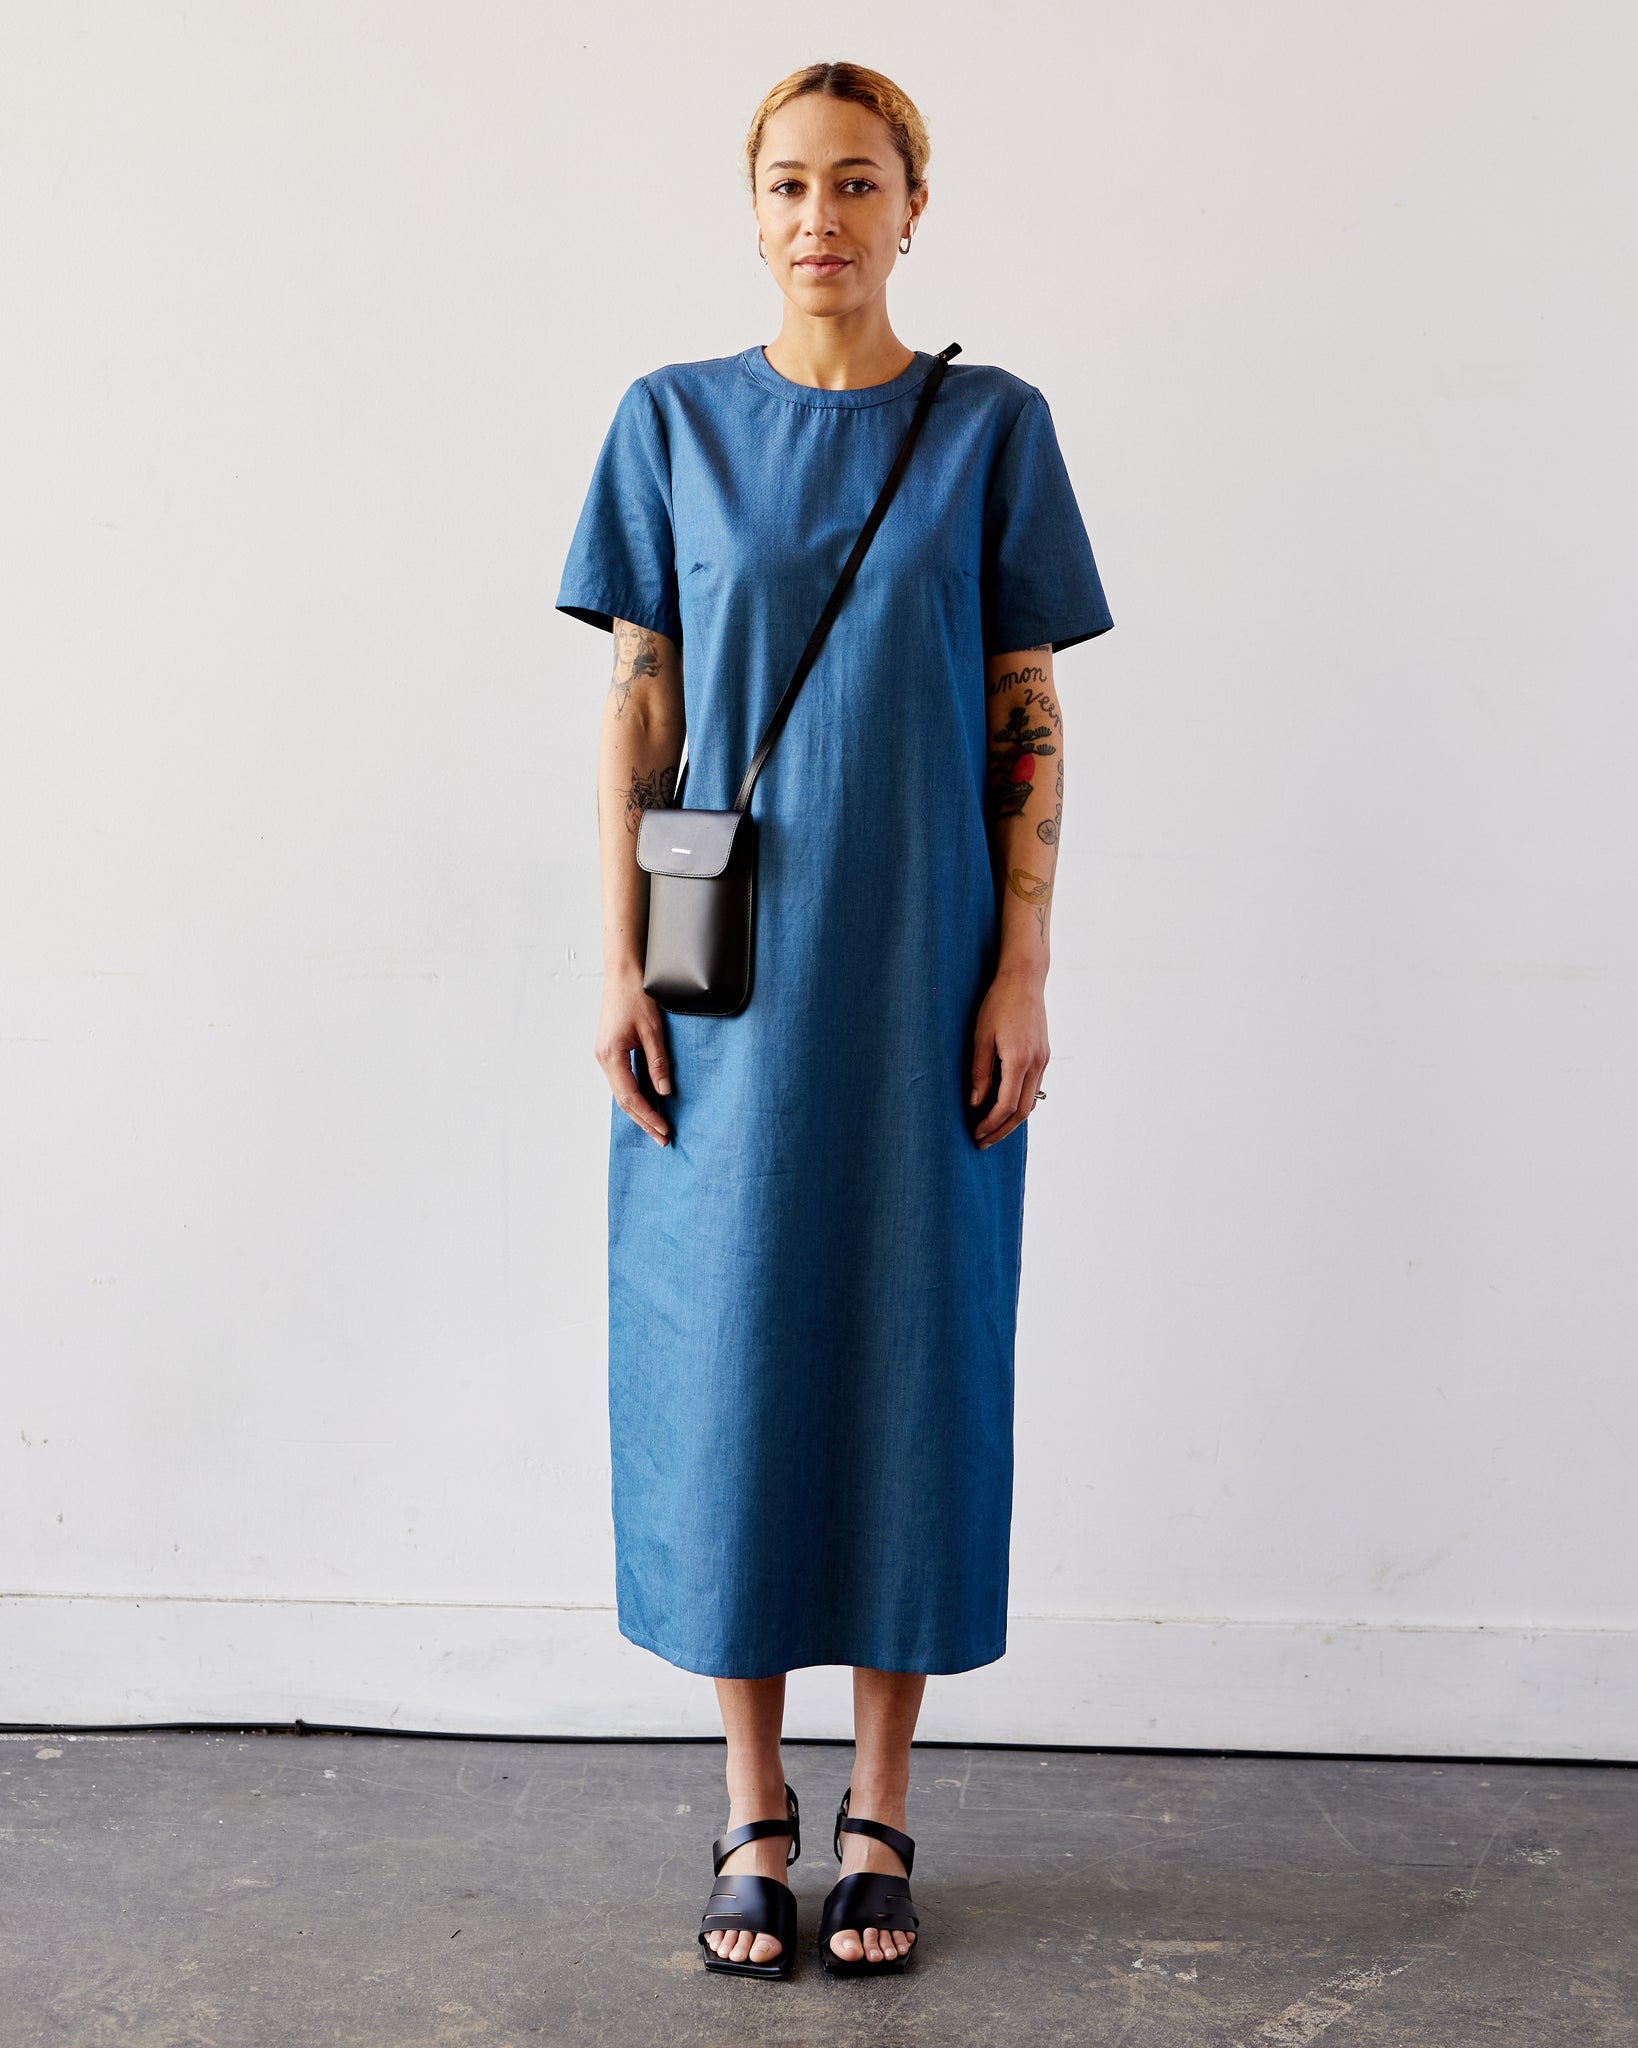 Atelier Delphine Pasanen Dress, Soft Lightweight Denim